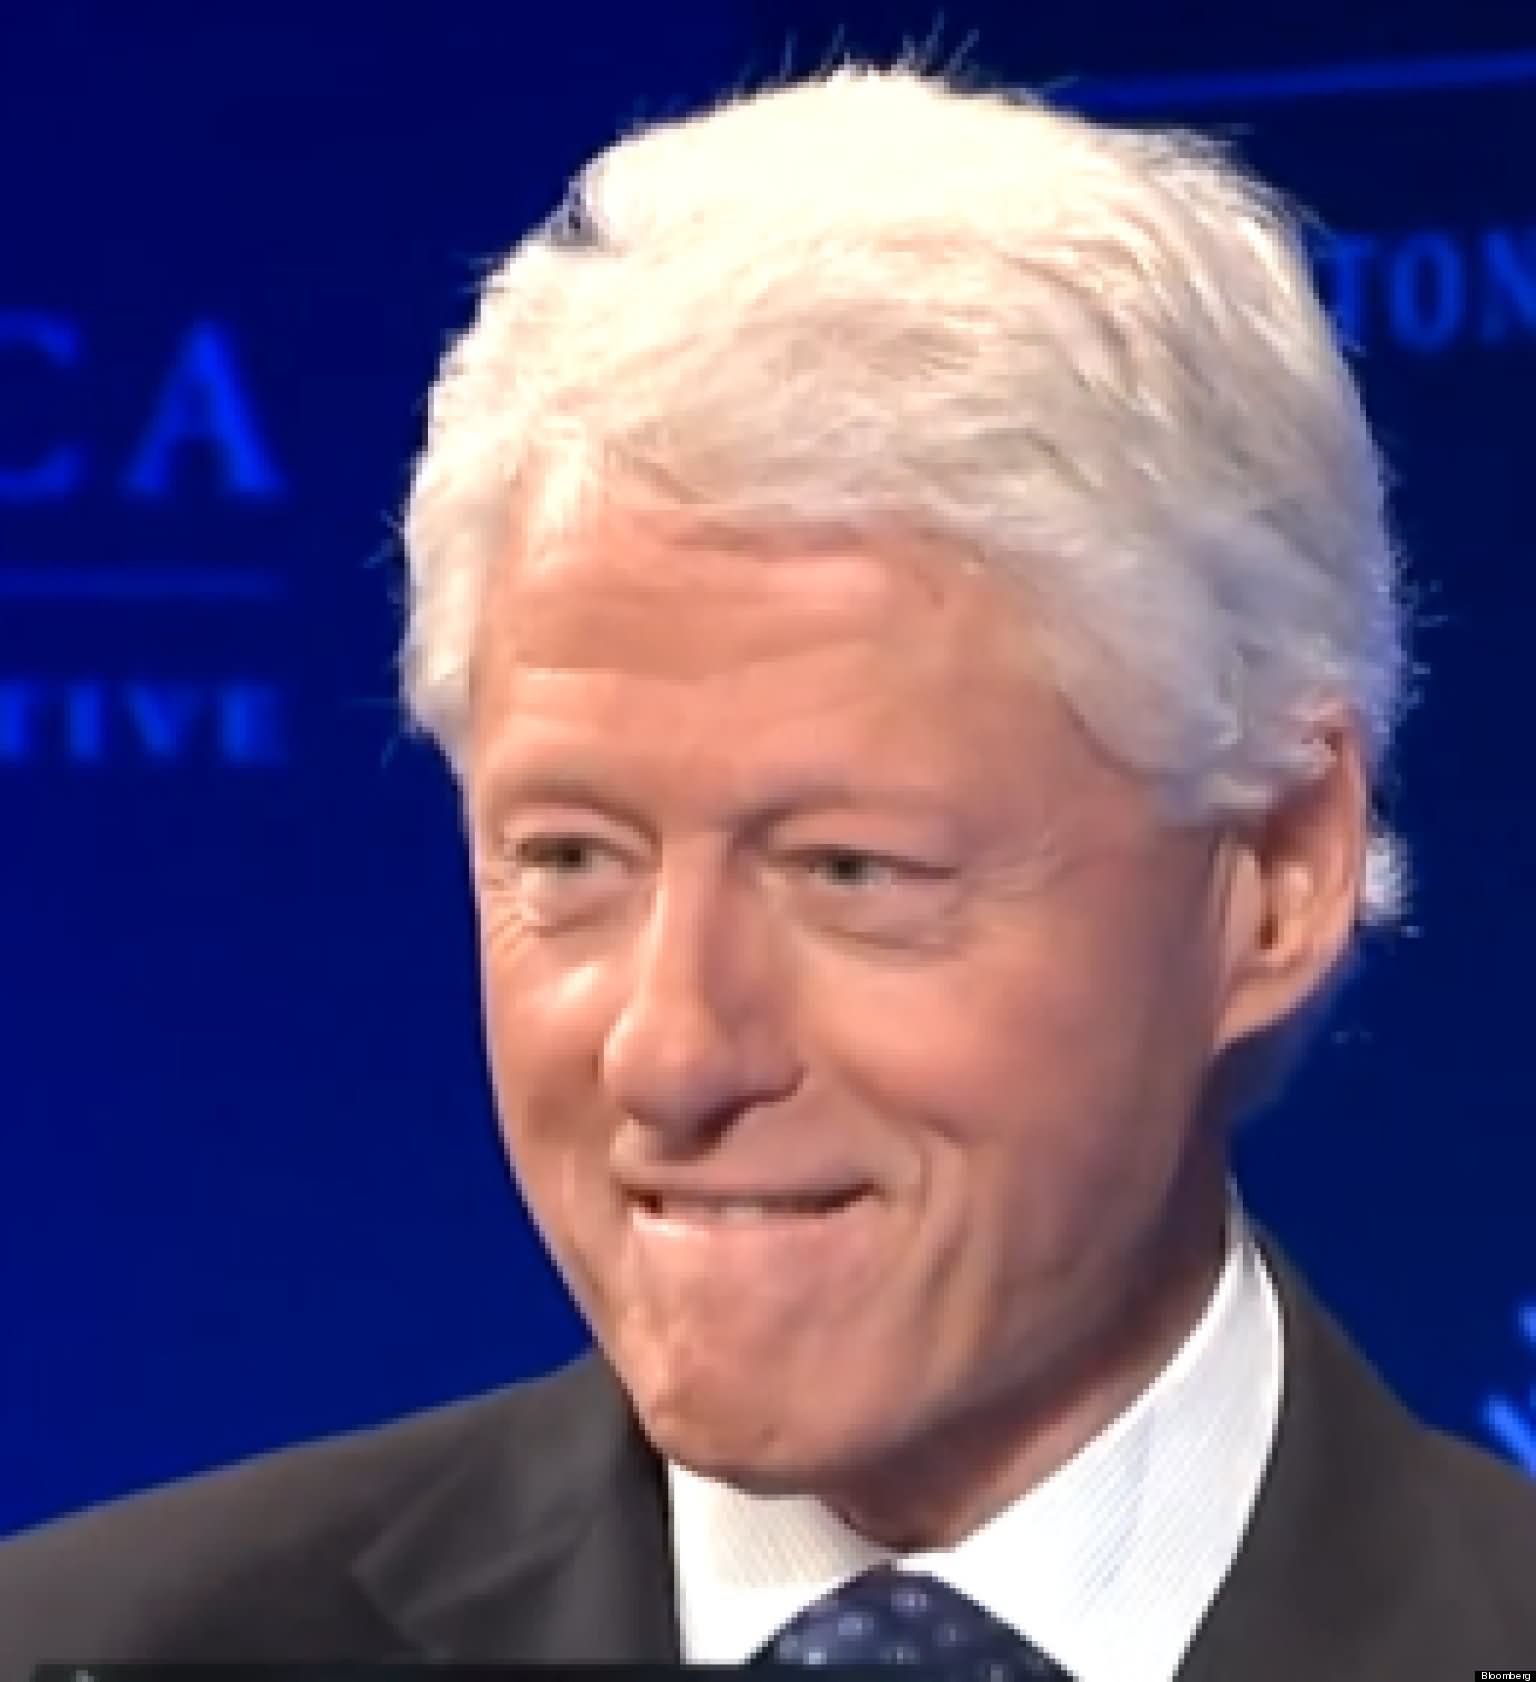 Funny Smiling Bill Clinton Face Photo